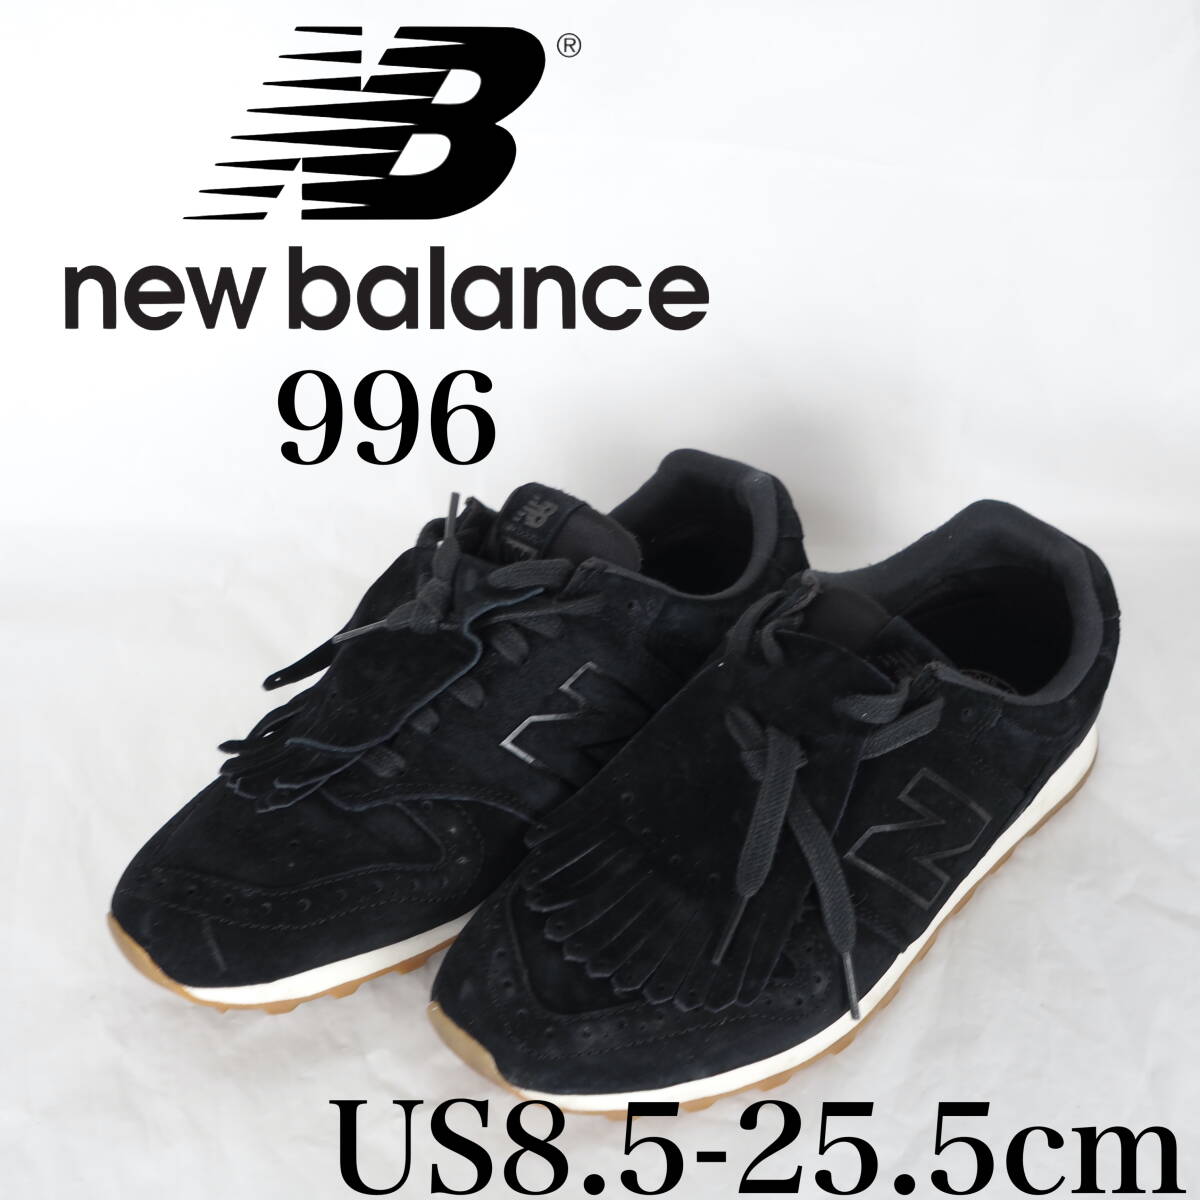 MK6071*New Balance996*ニューバランス*レディーススニーカー*US8.5-25.5cm*黒_画像1